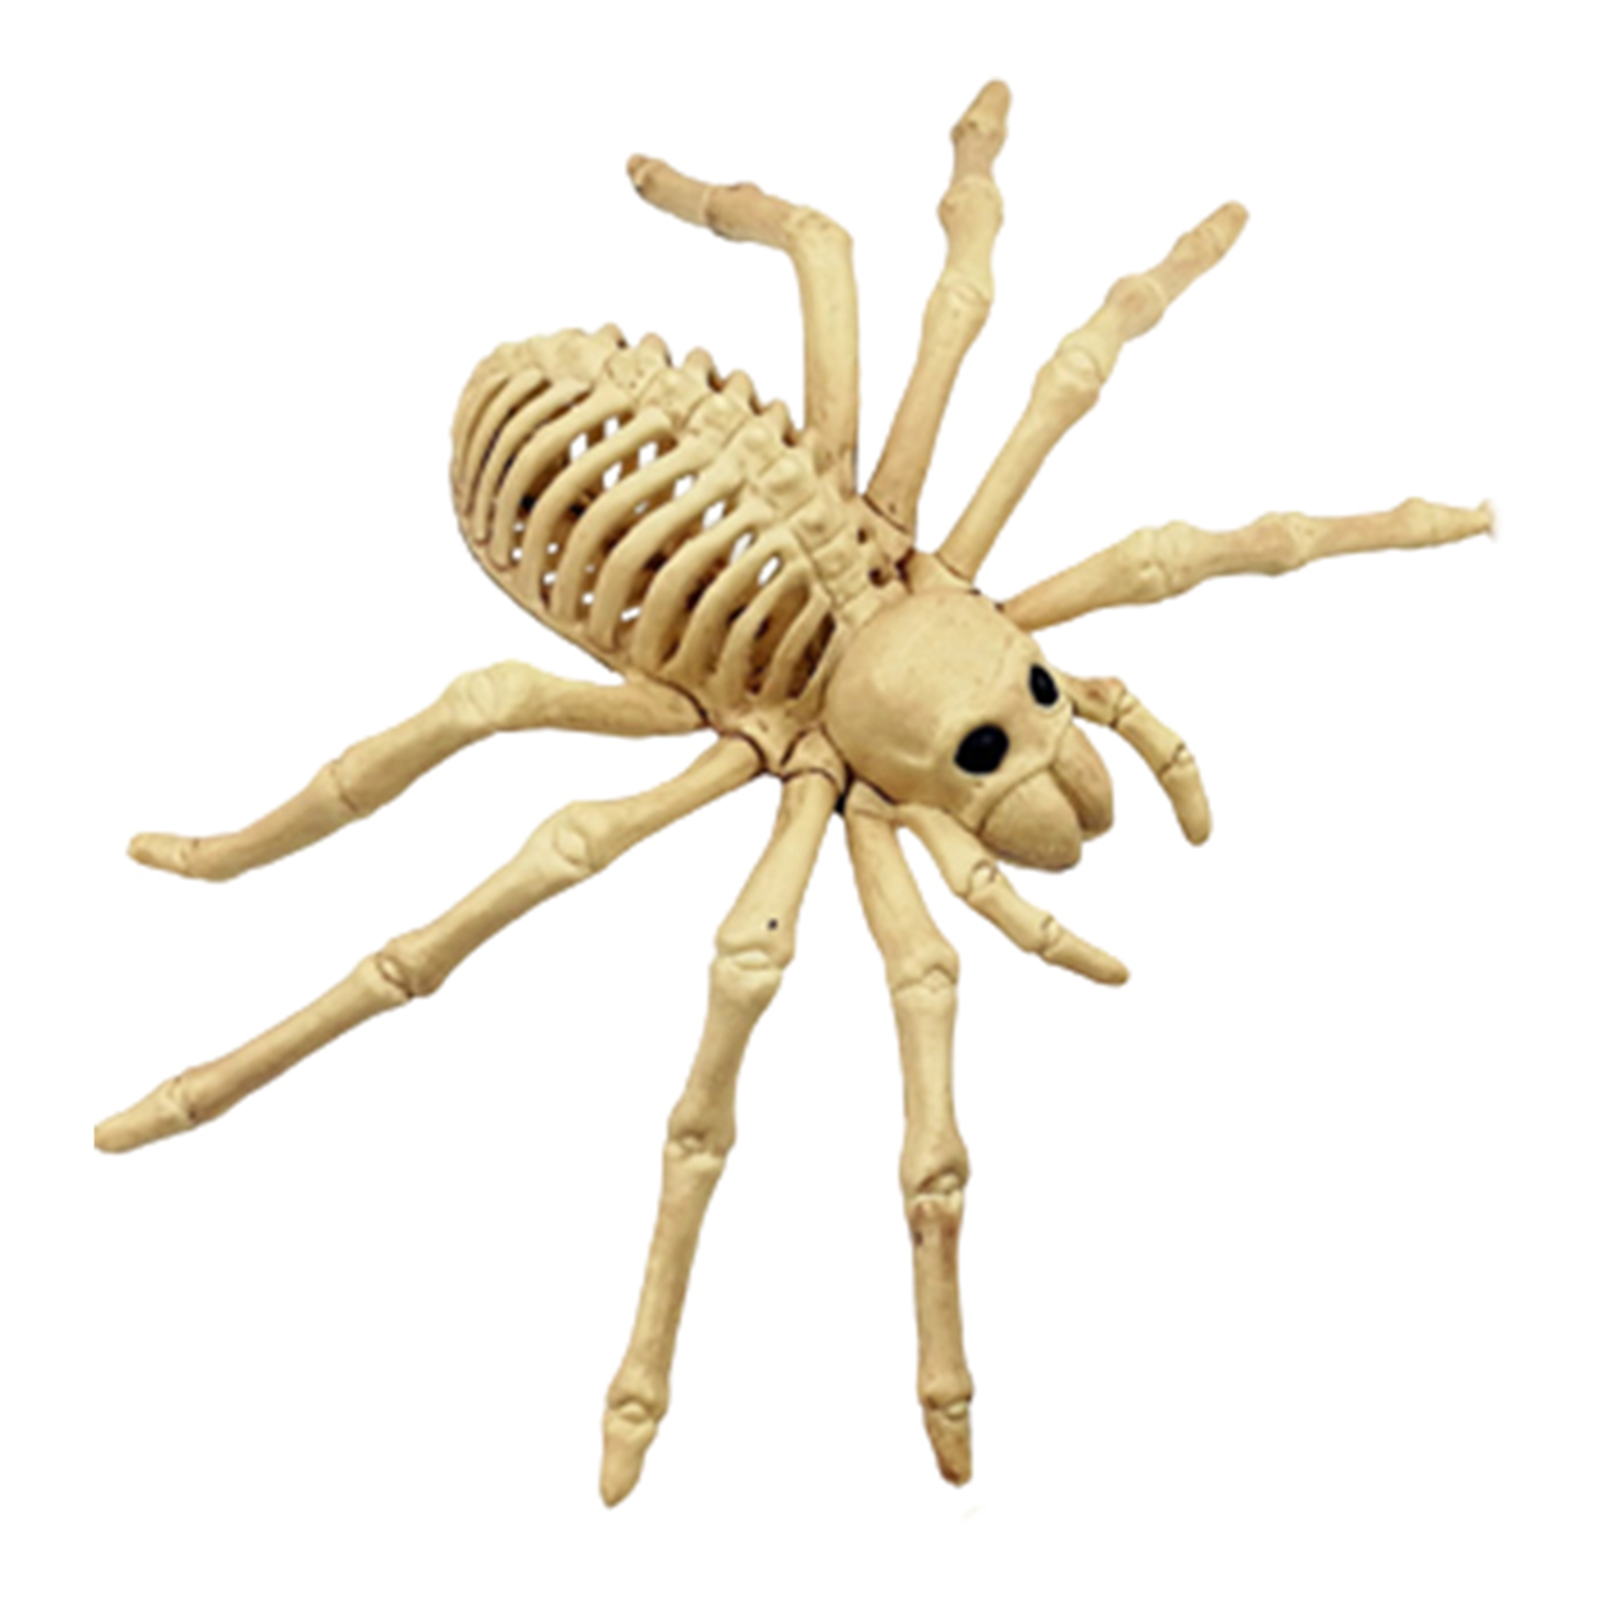 microgood Spider Skeleton Model Realistic Creepy Horror Weather